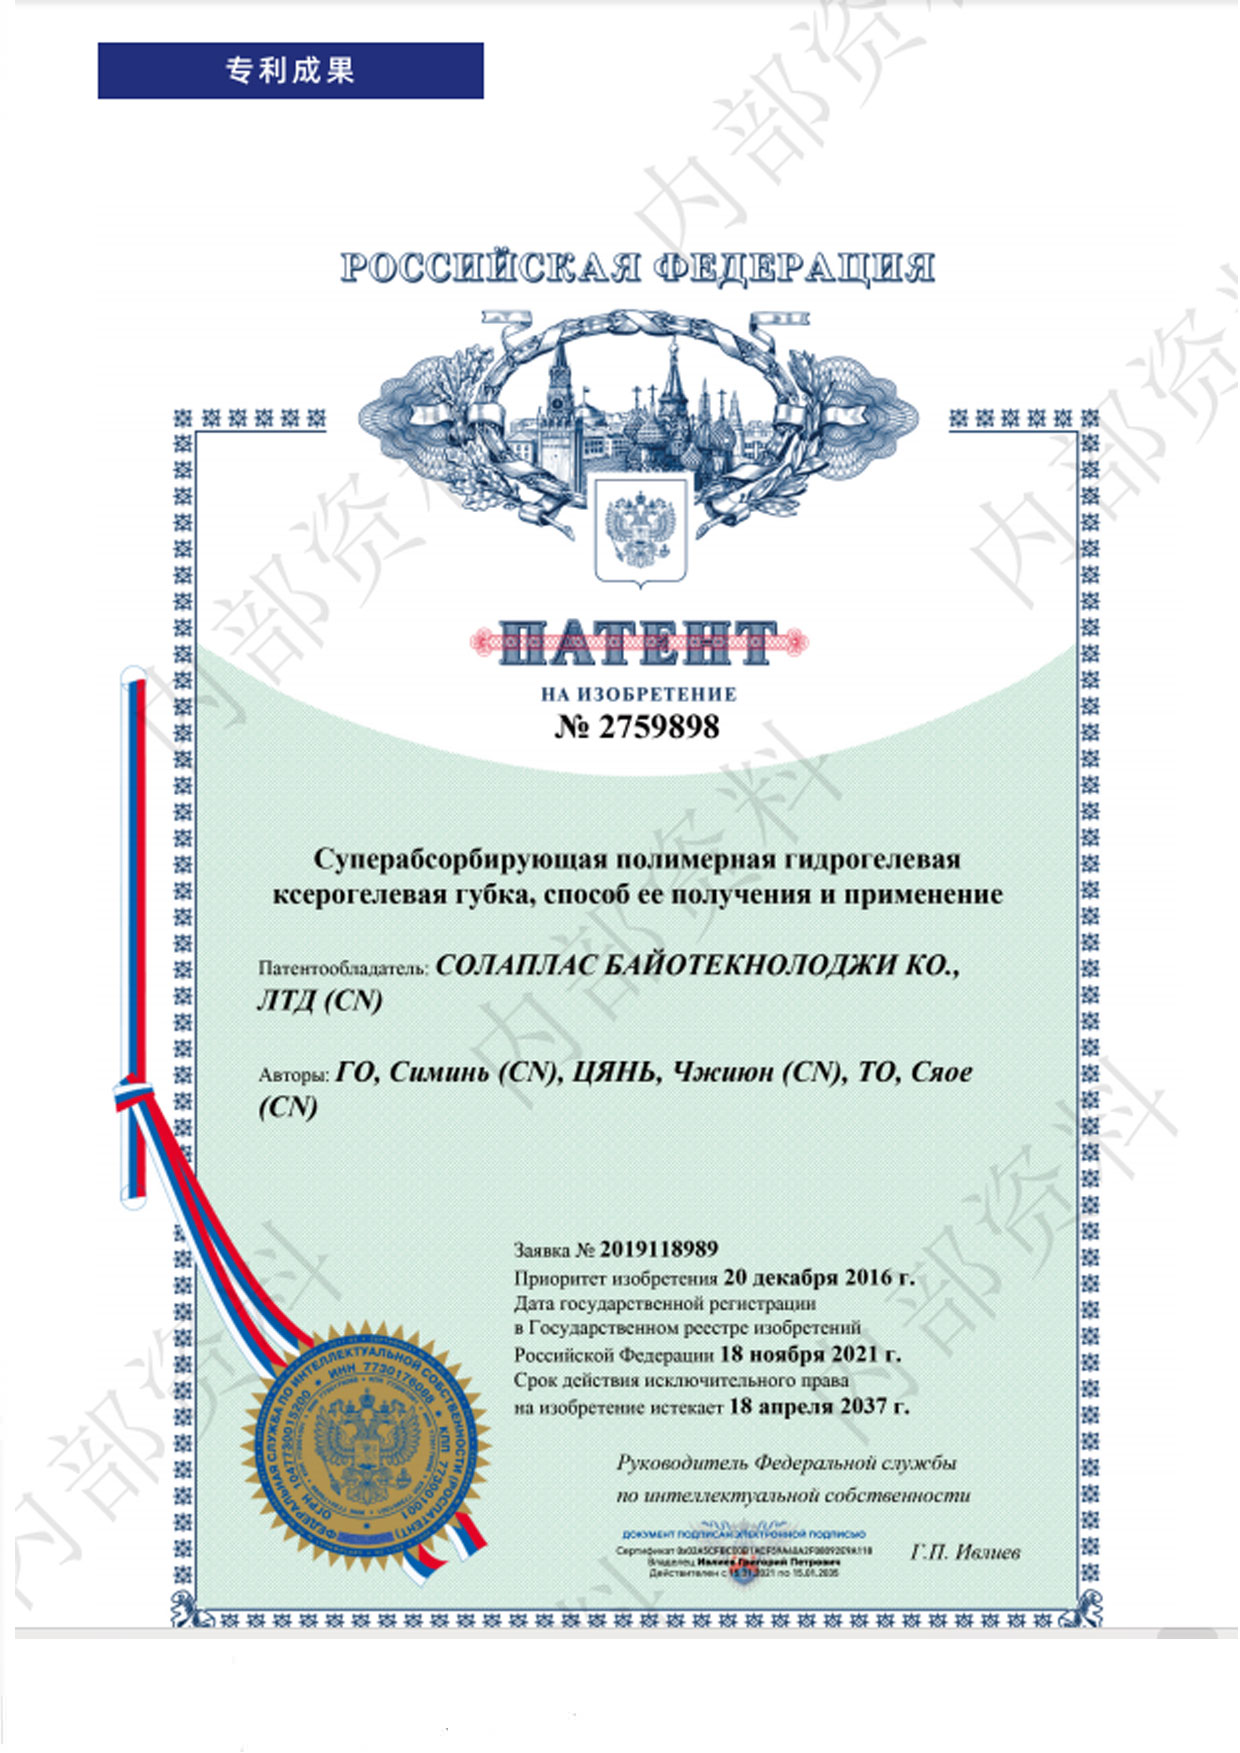 Patent_russia-2